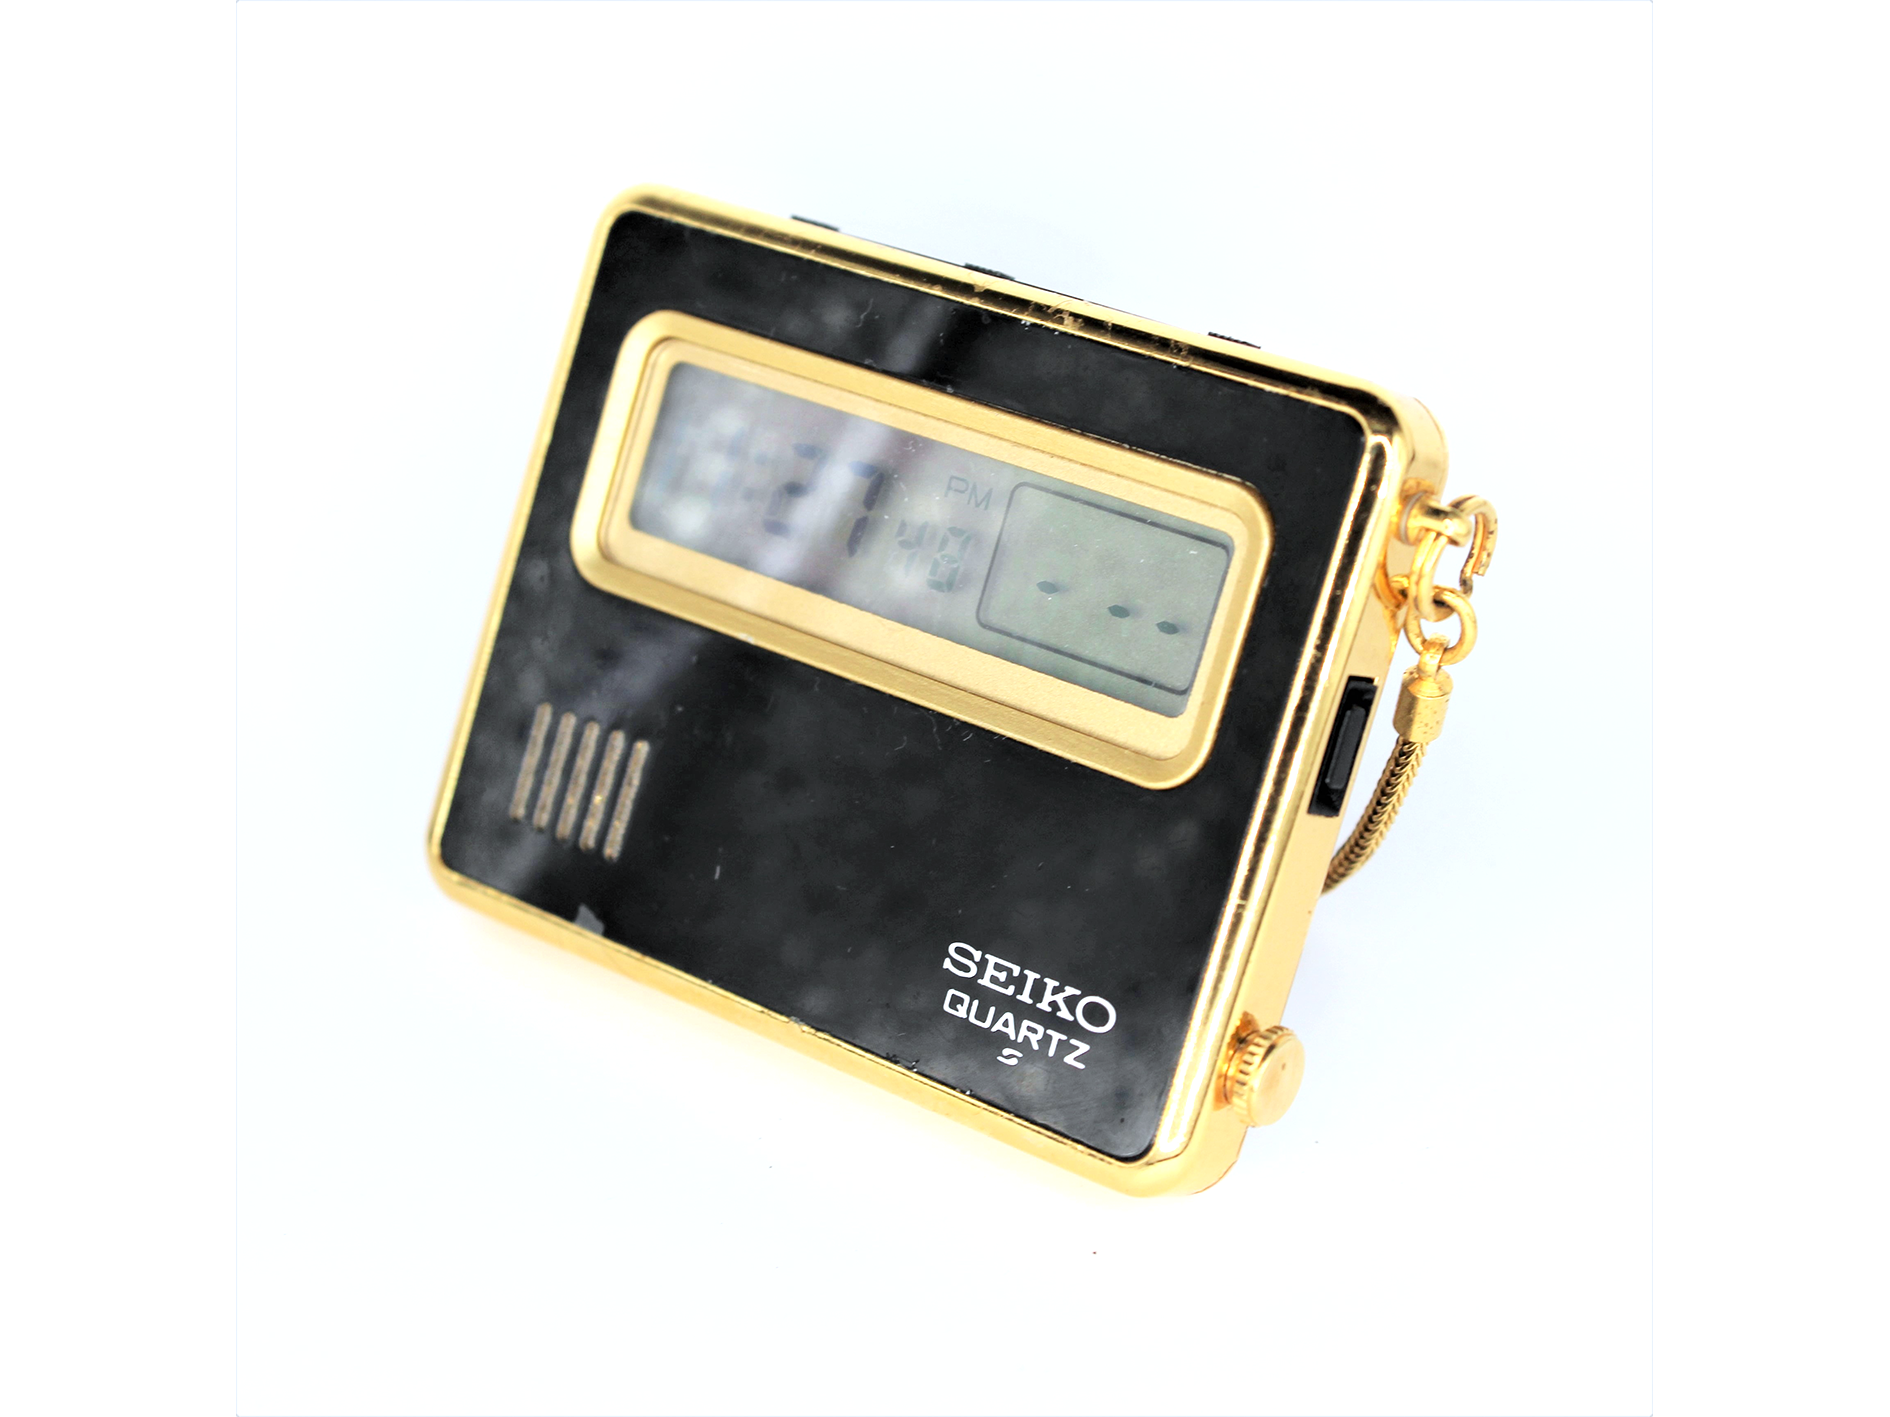 Vintage Seiko Quartz Pocket Watch 7412-803K - Toronto Vintage Watches -  Vintage Seiko passion